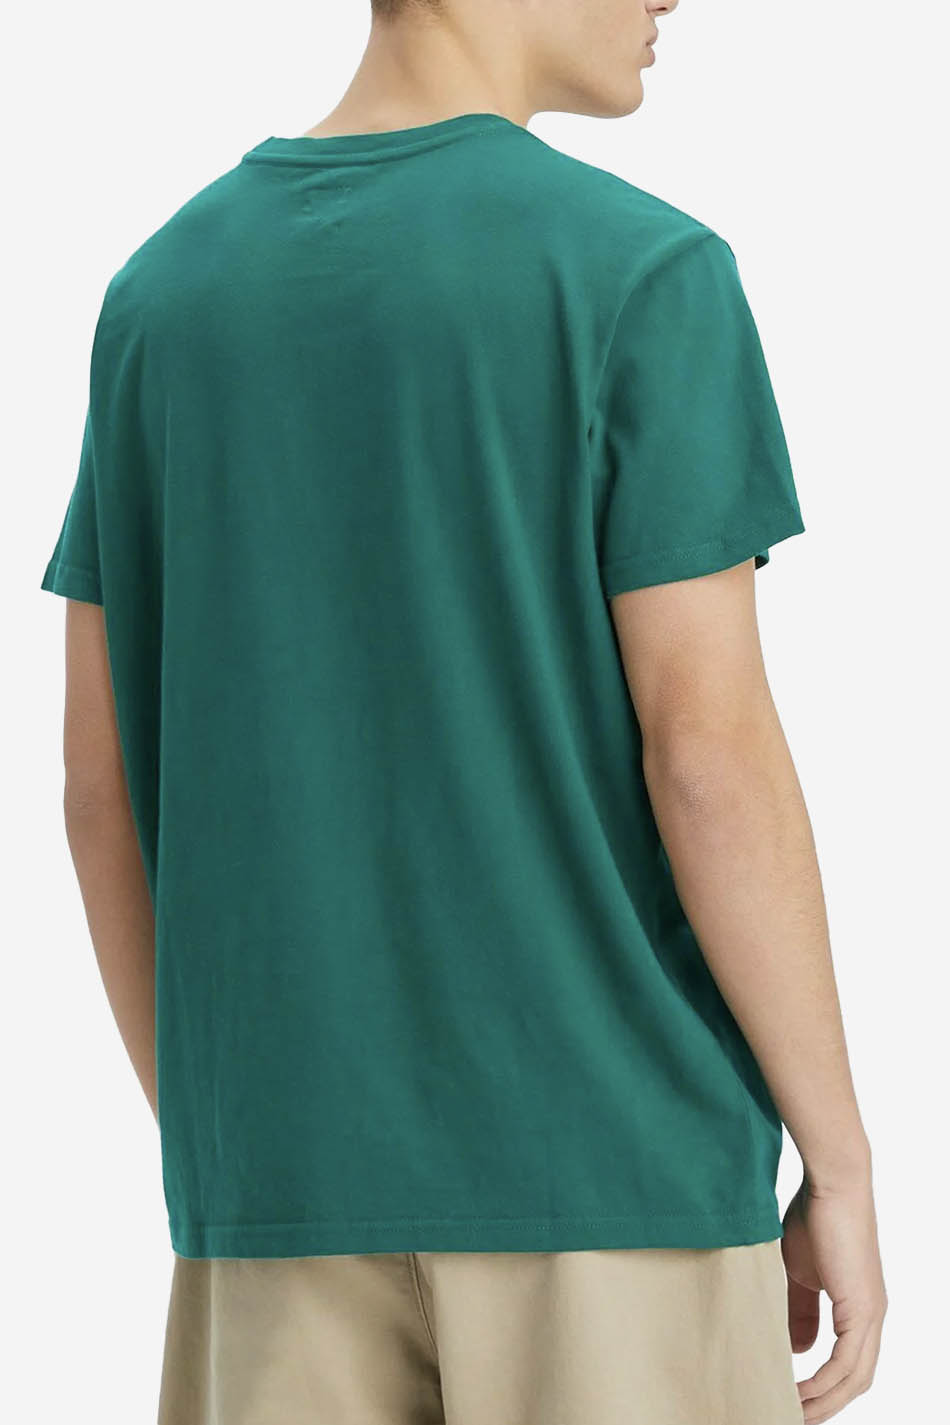 Green Levi's T-Shirt